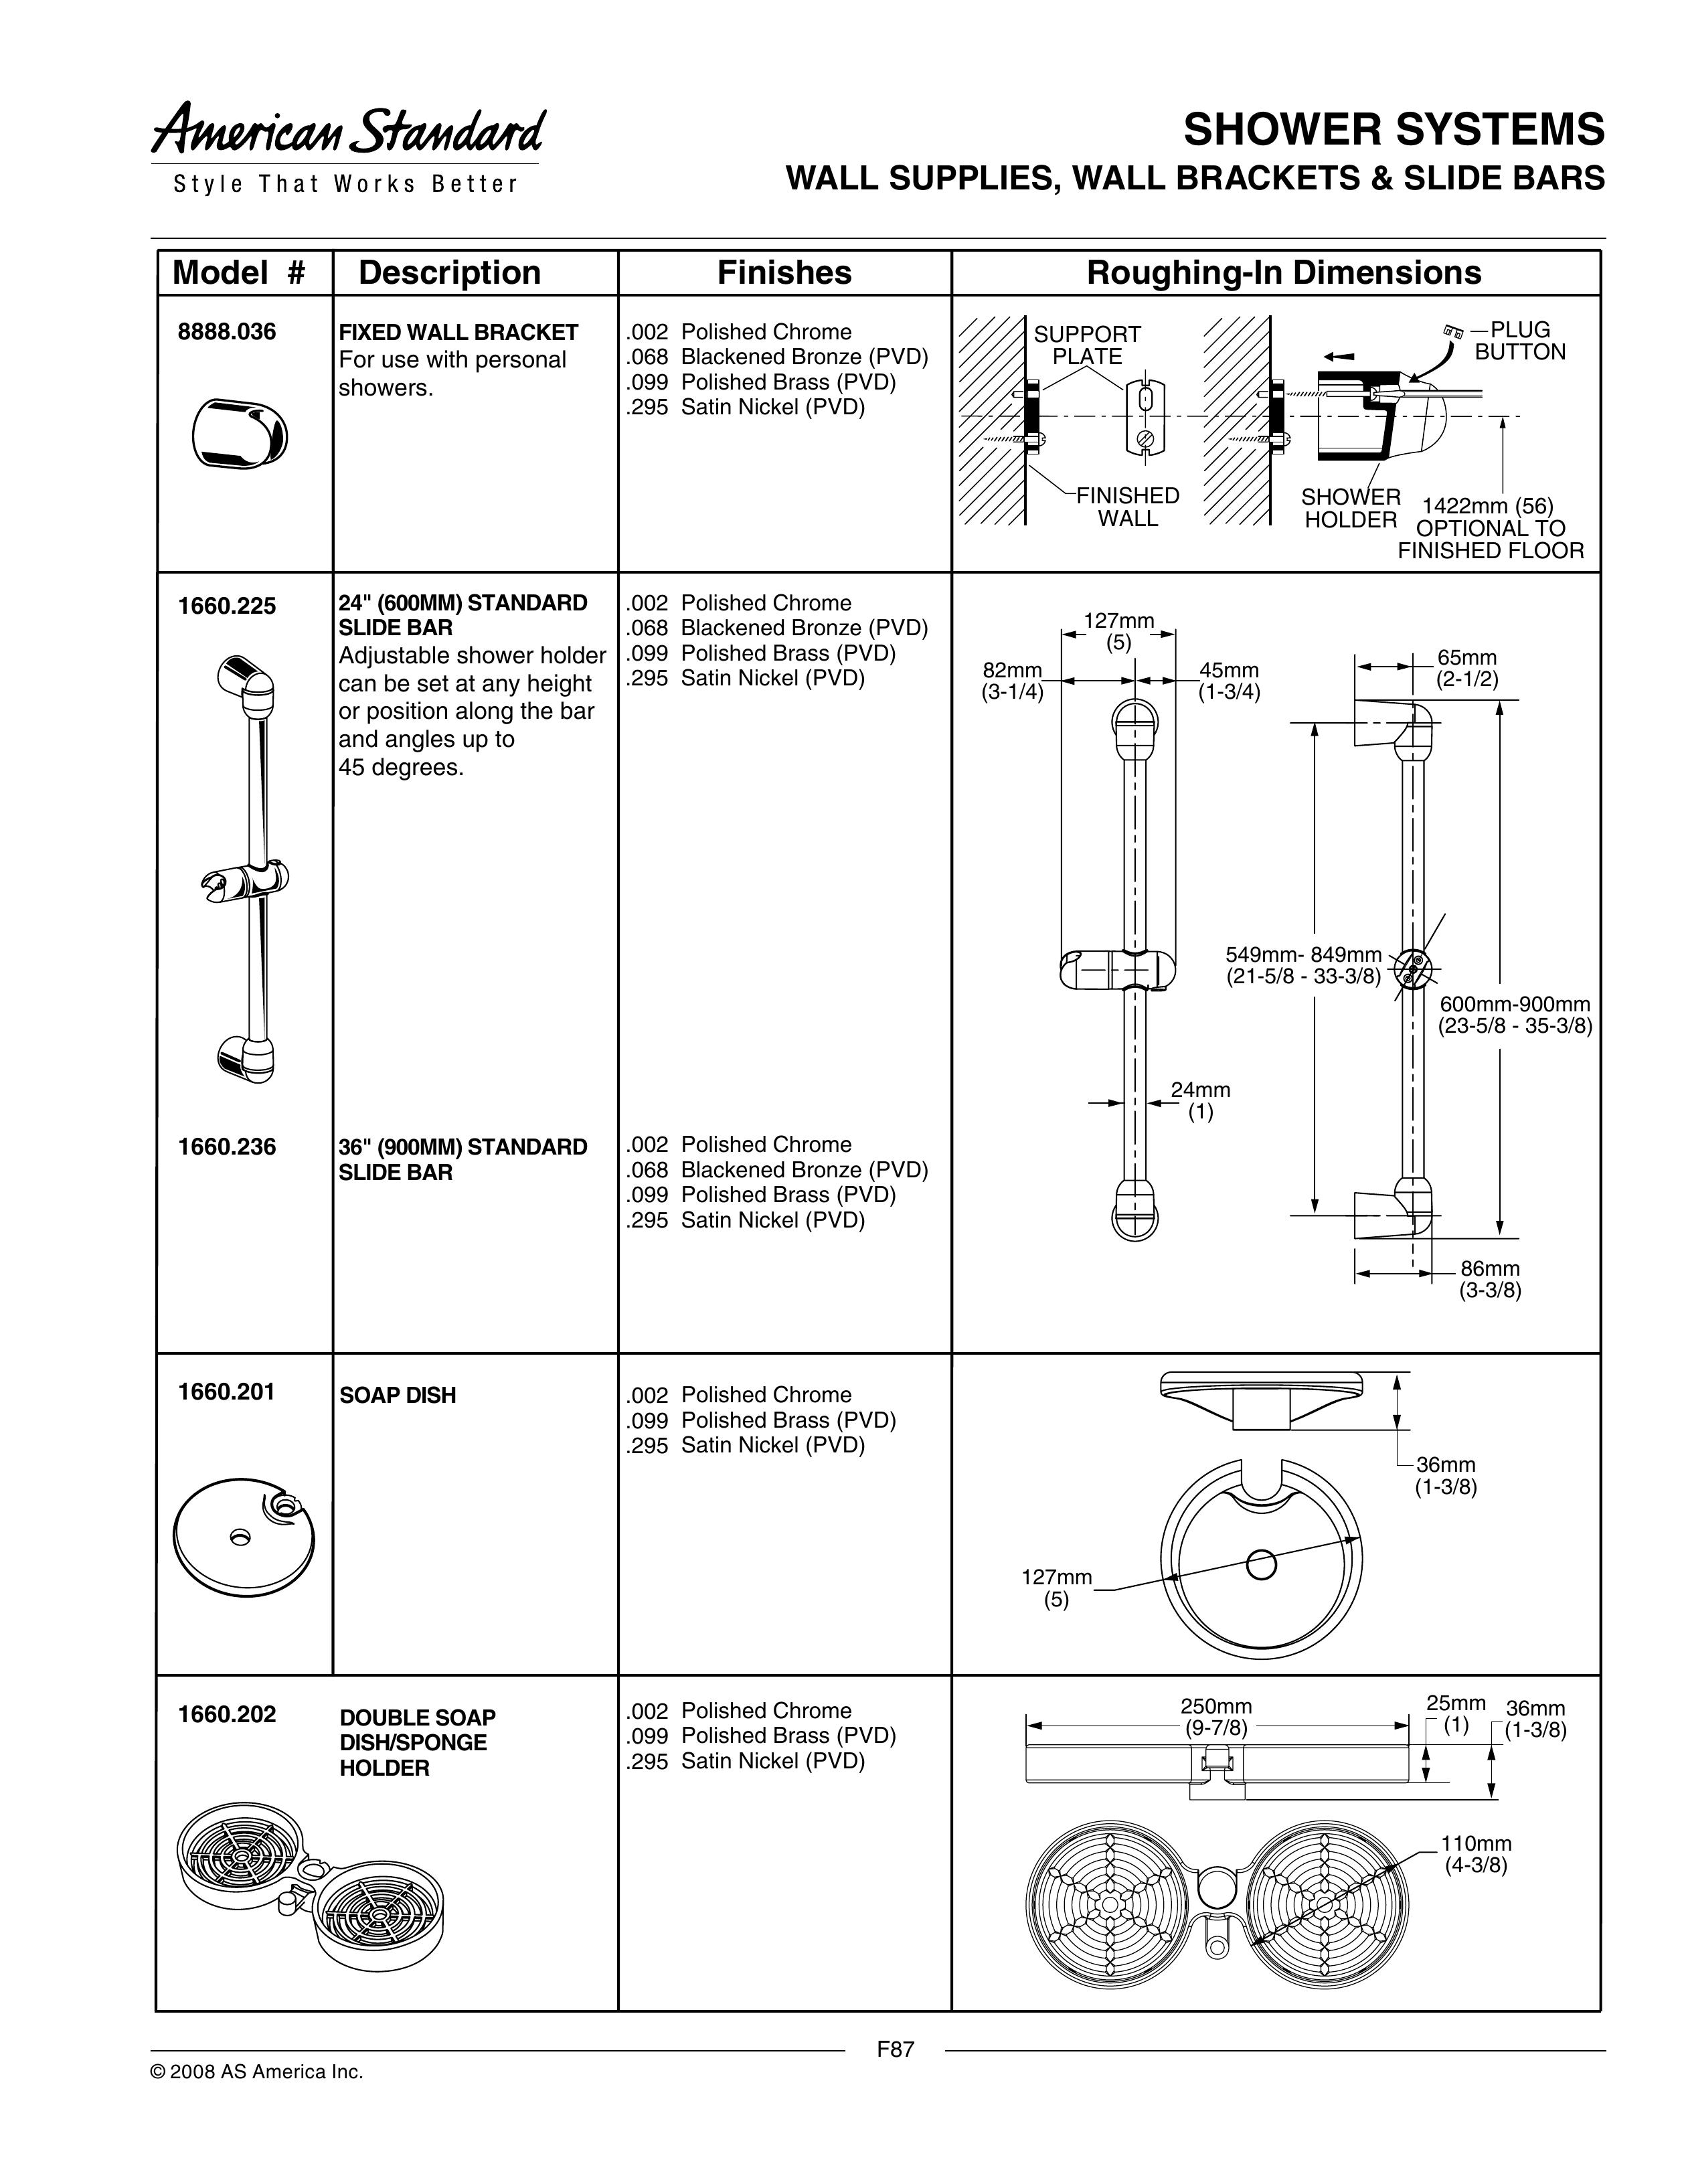 American Standard 1660.201 Outdoor Shower User Manual